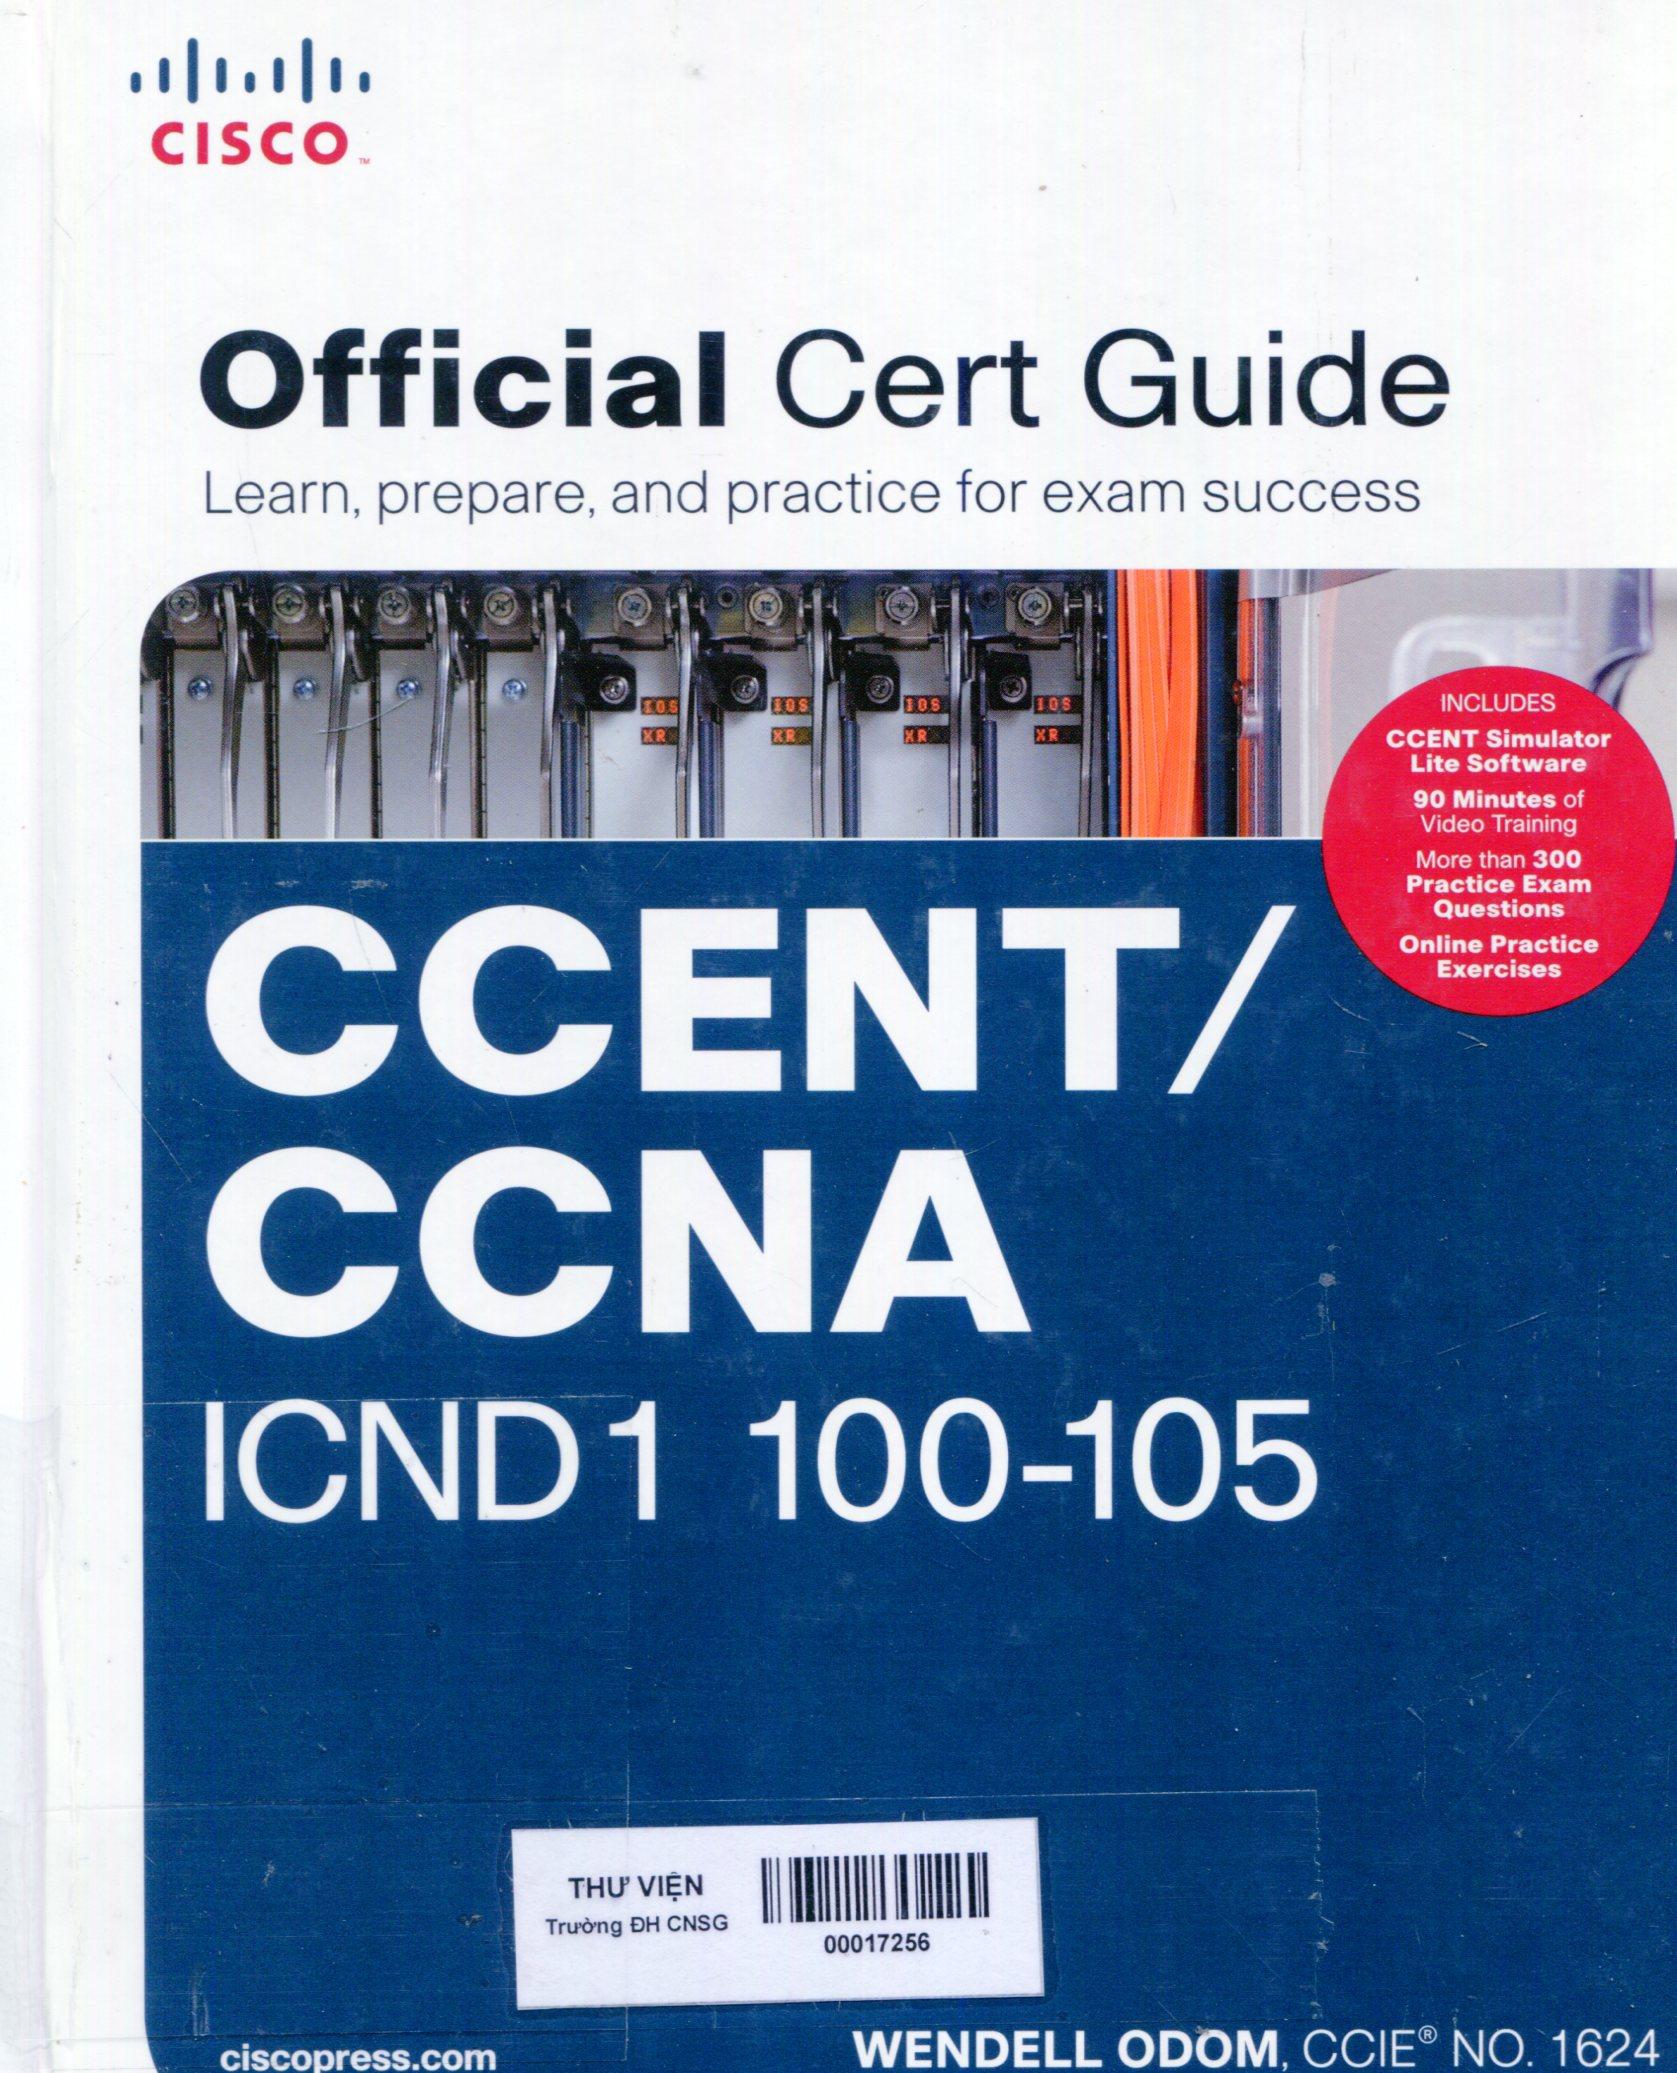 CCENT/CCNA ICND1 100-105 official cert guide